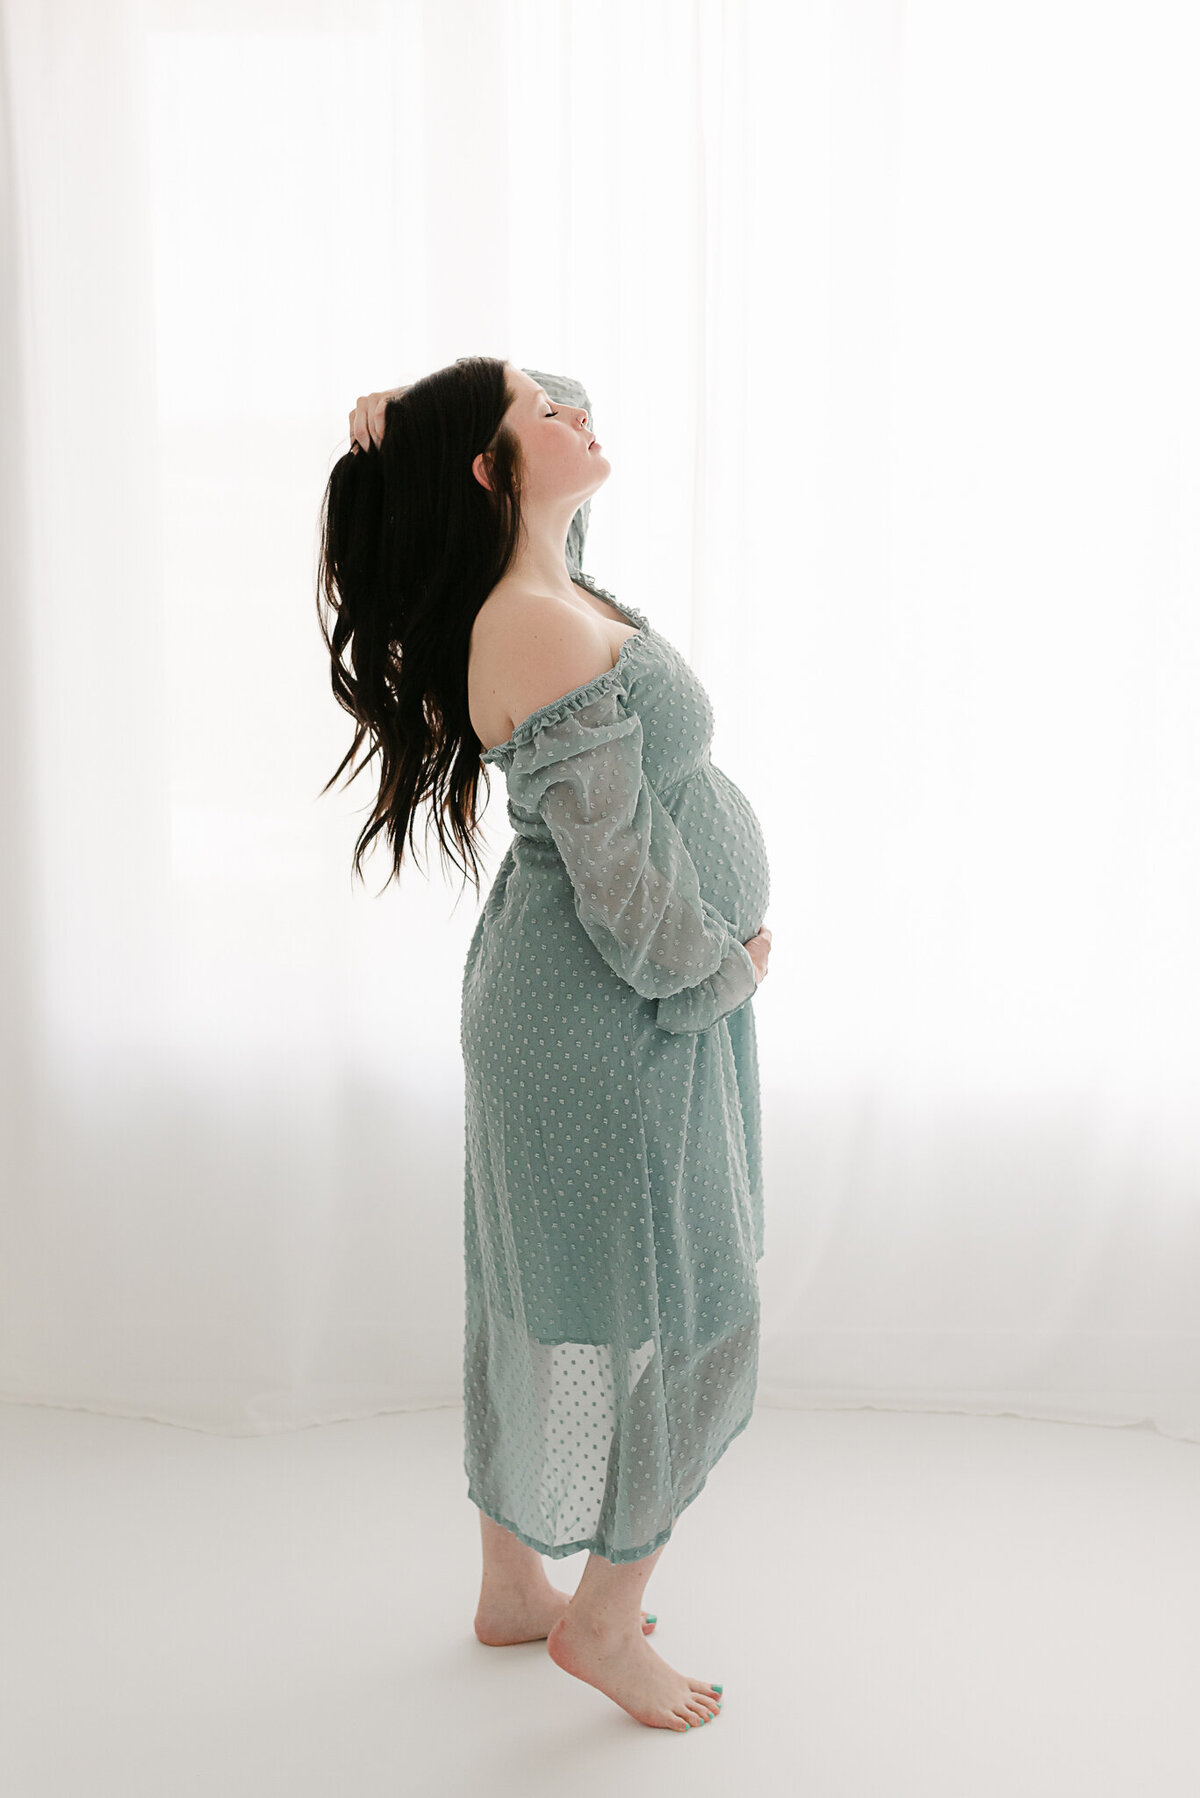 edmonton-maternity-photographer-43-5